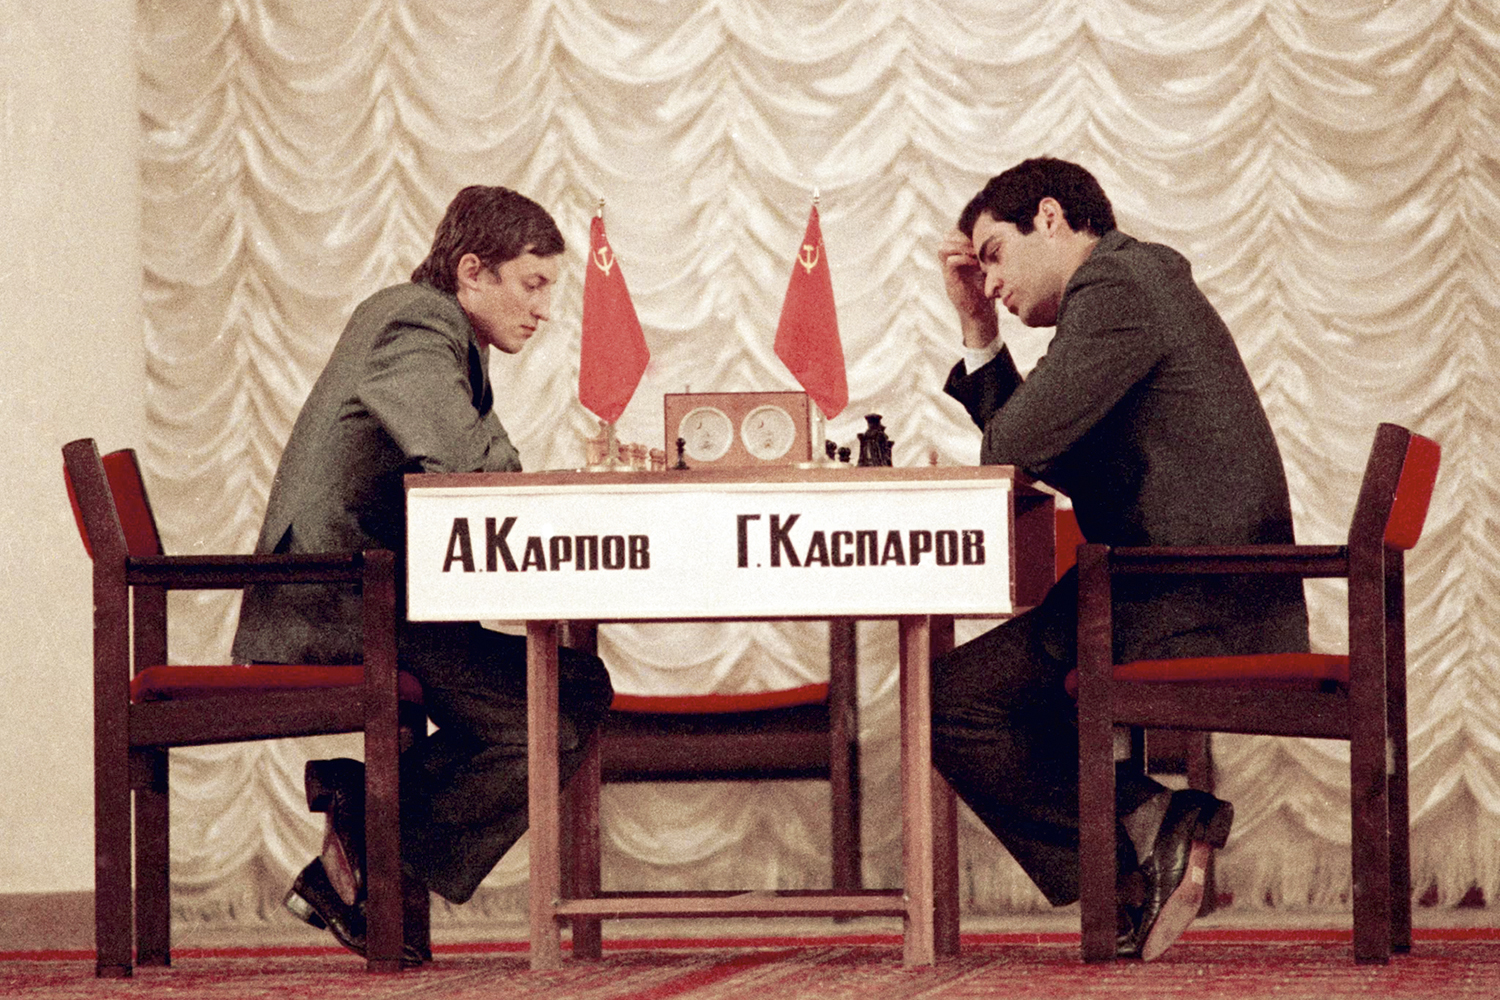 Karpov faz uma sequencia GENIAL, #xadrez